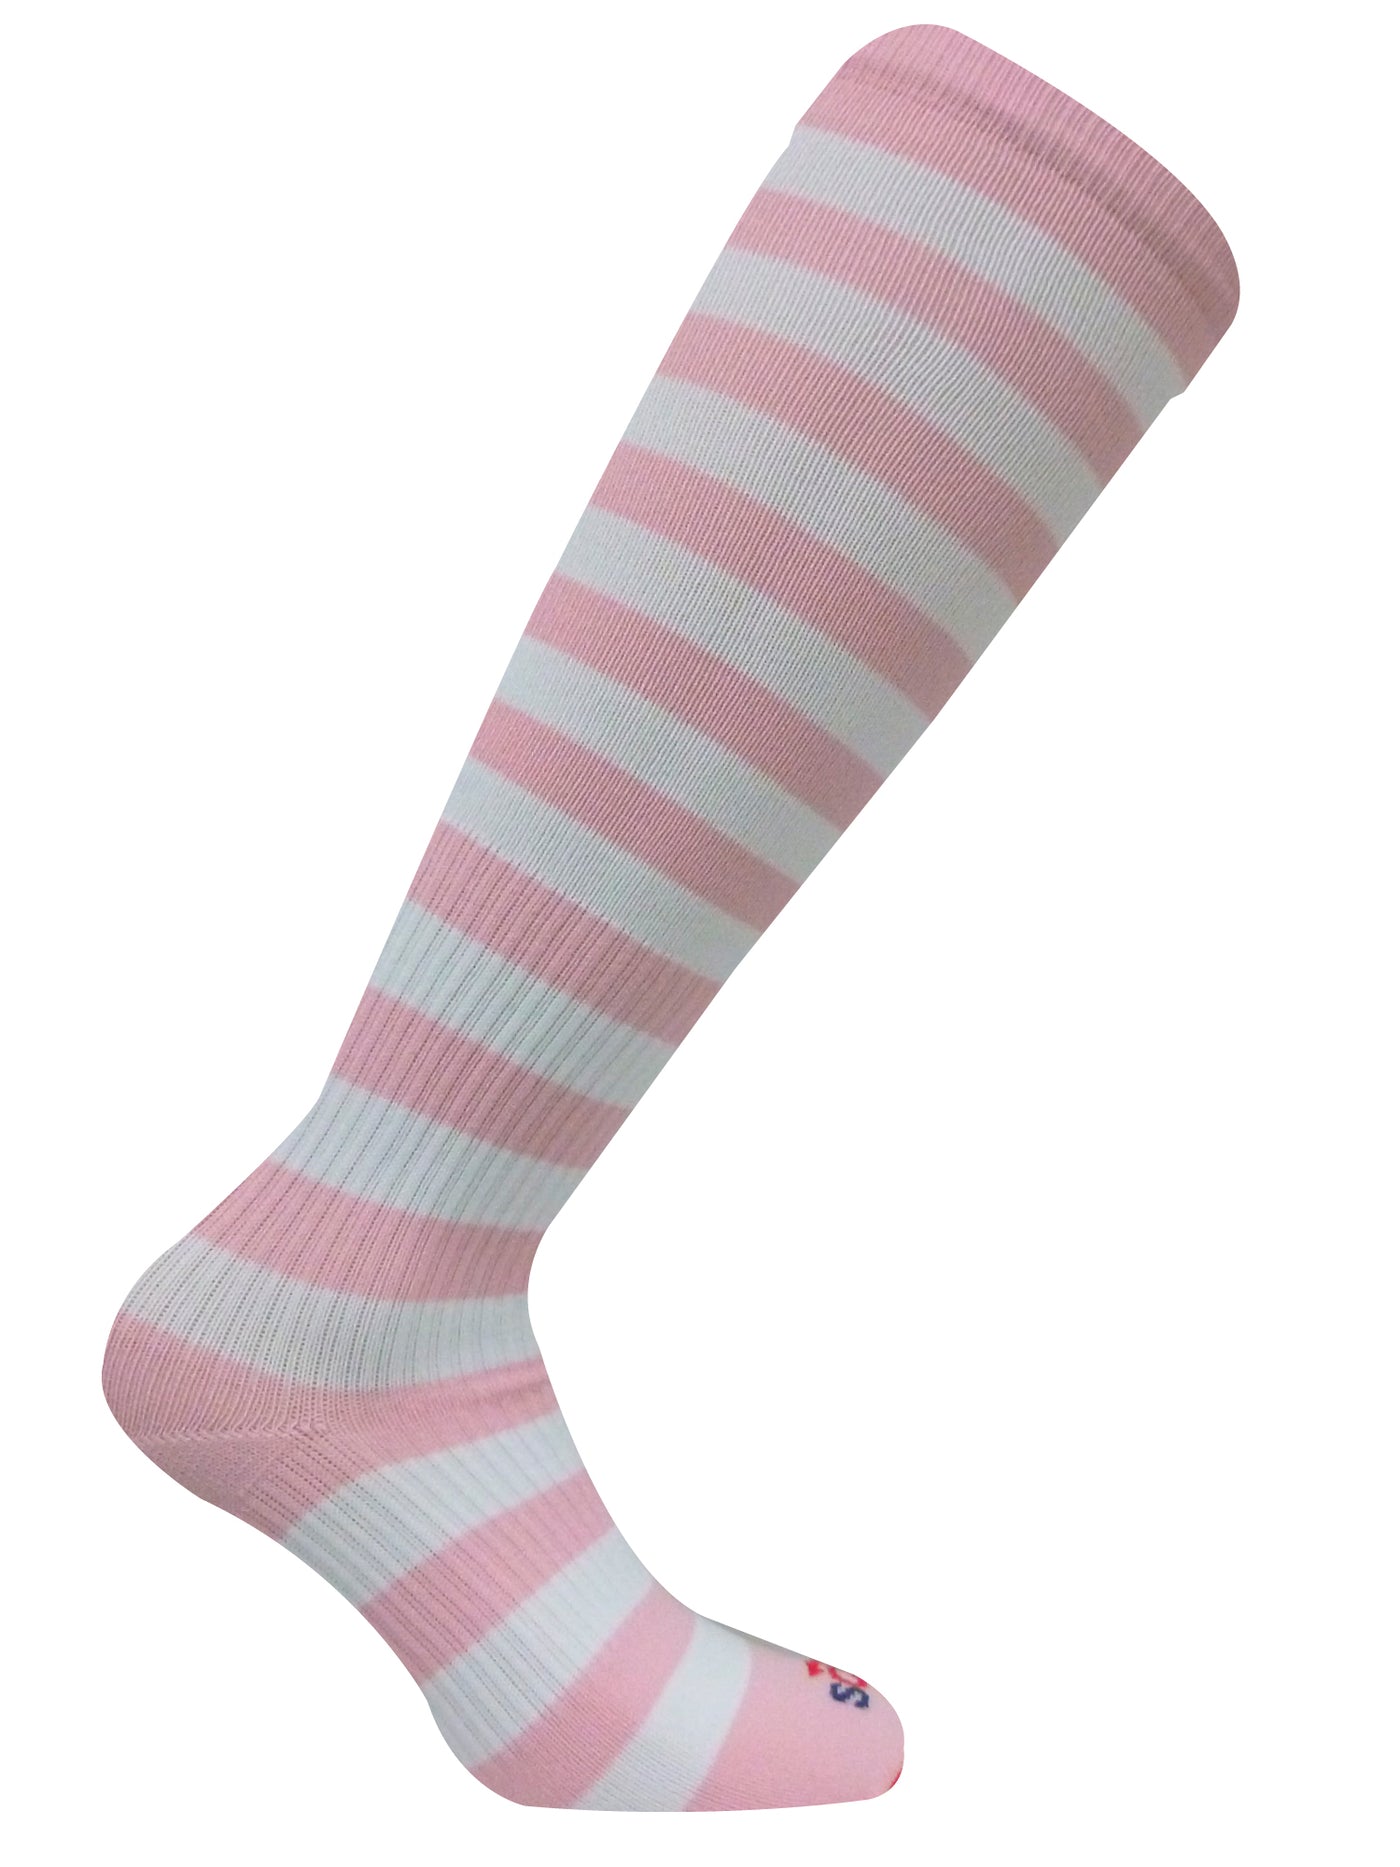 Women's Maternity Vein Care Light Compression Socks - CSN7011 - Striped Pink